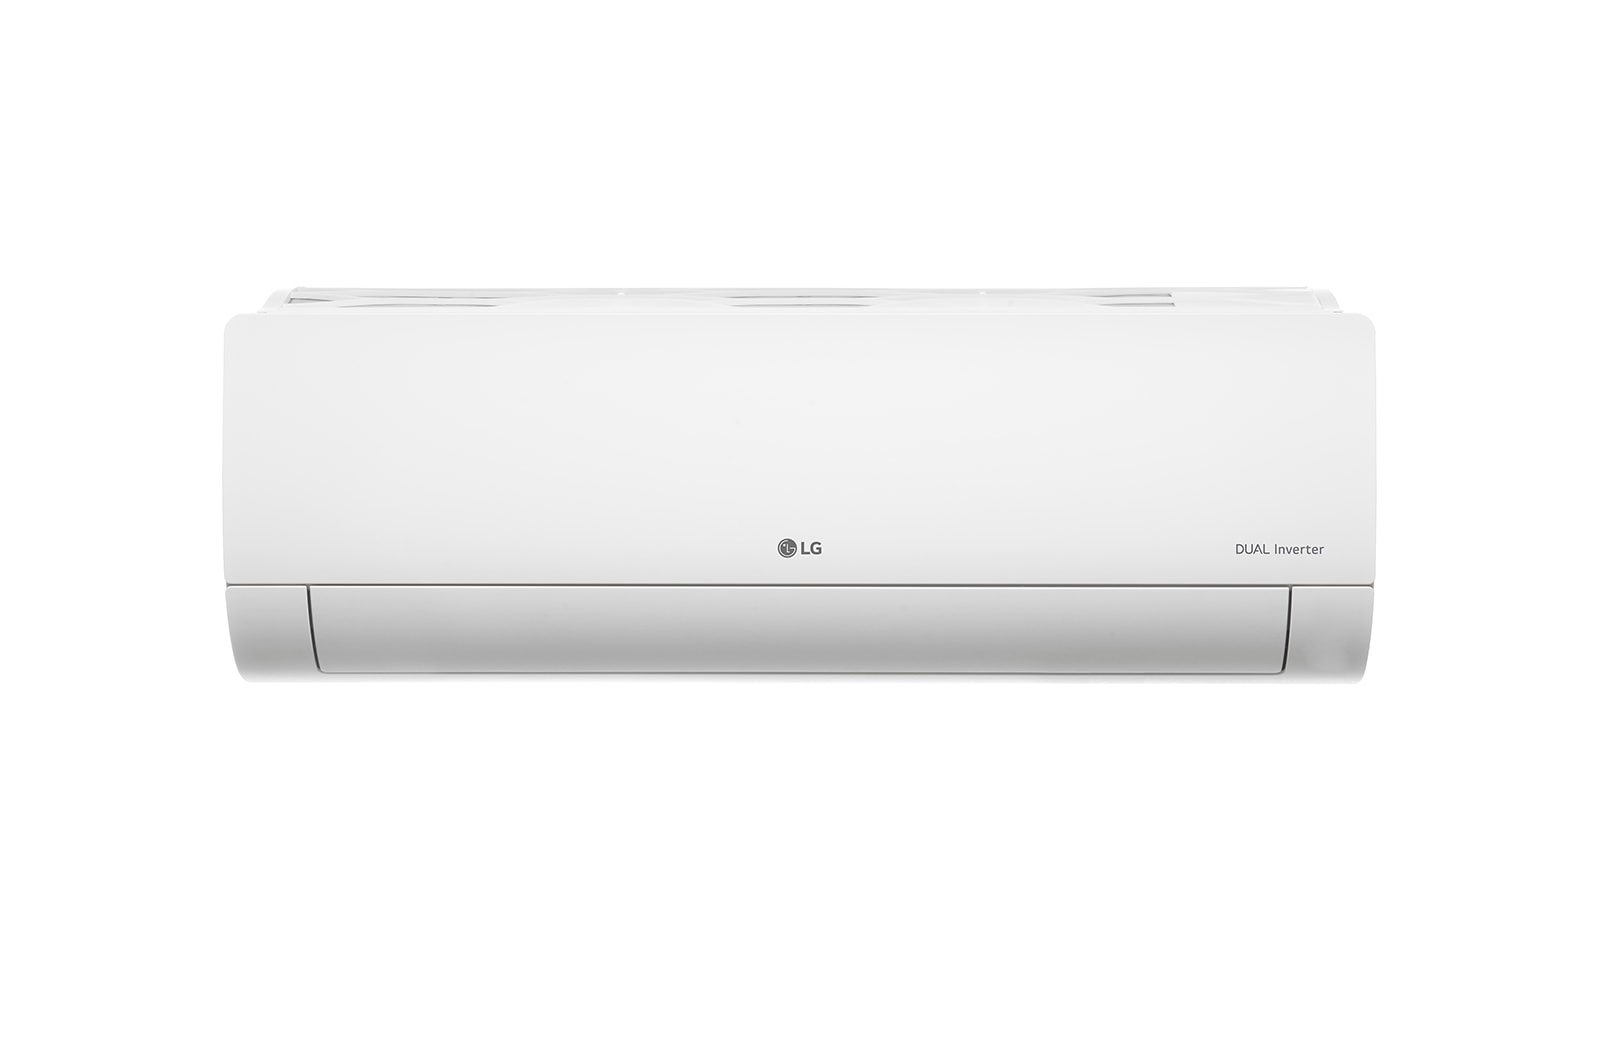 LG RS-Q19UWZE split air conditioner front view